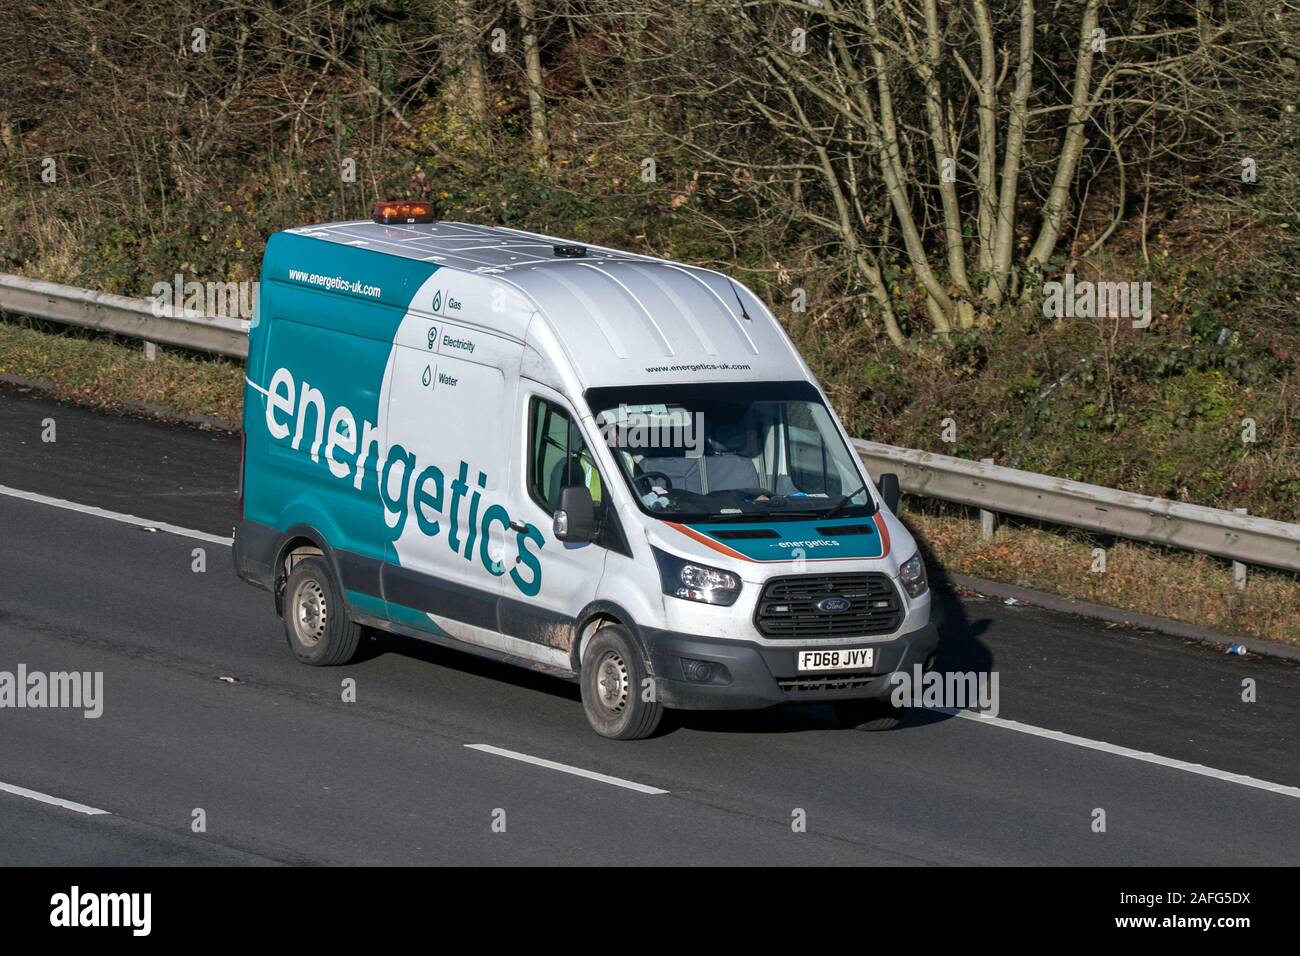 Energetics service vandriving on the M61 near Manchester, UK Stock Photo